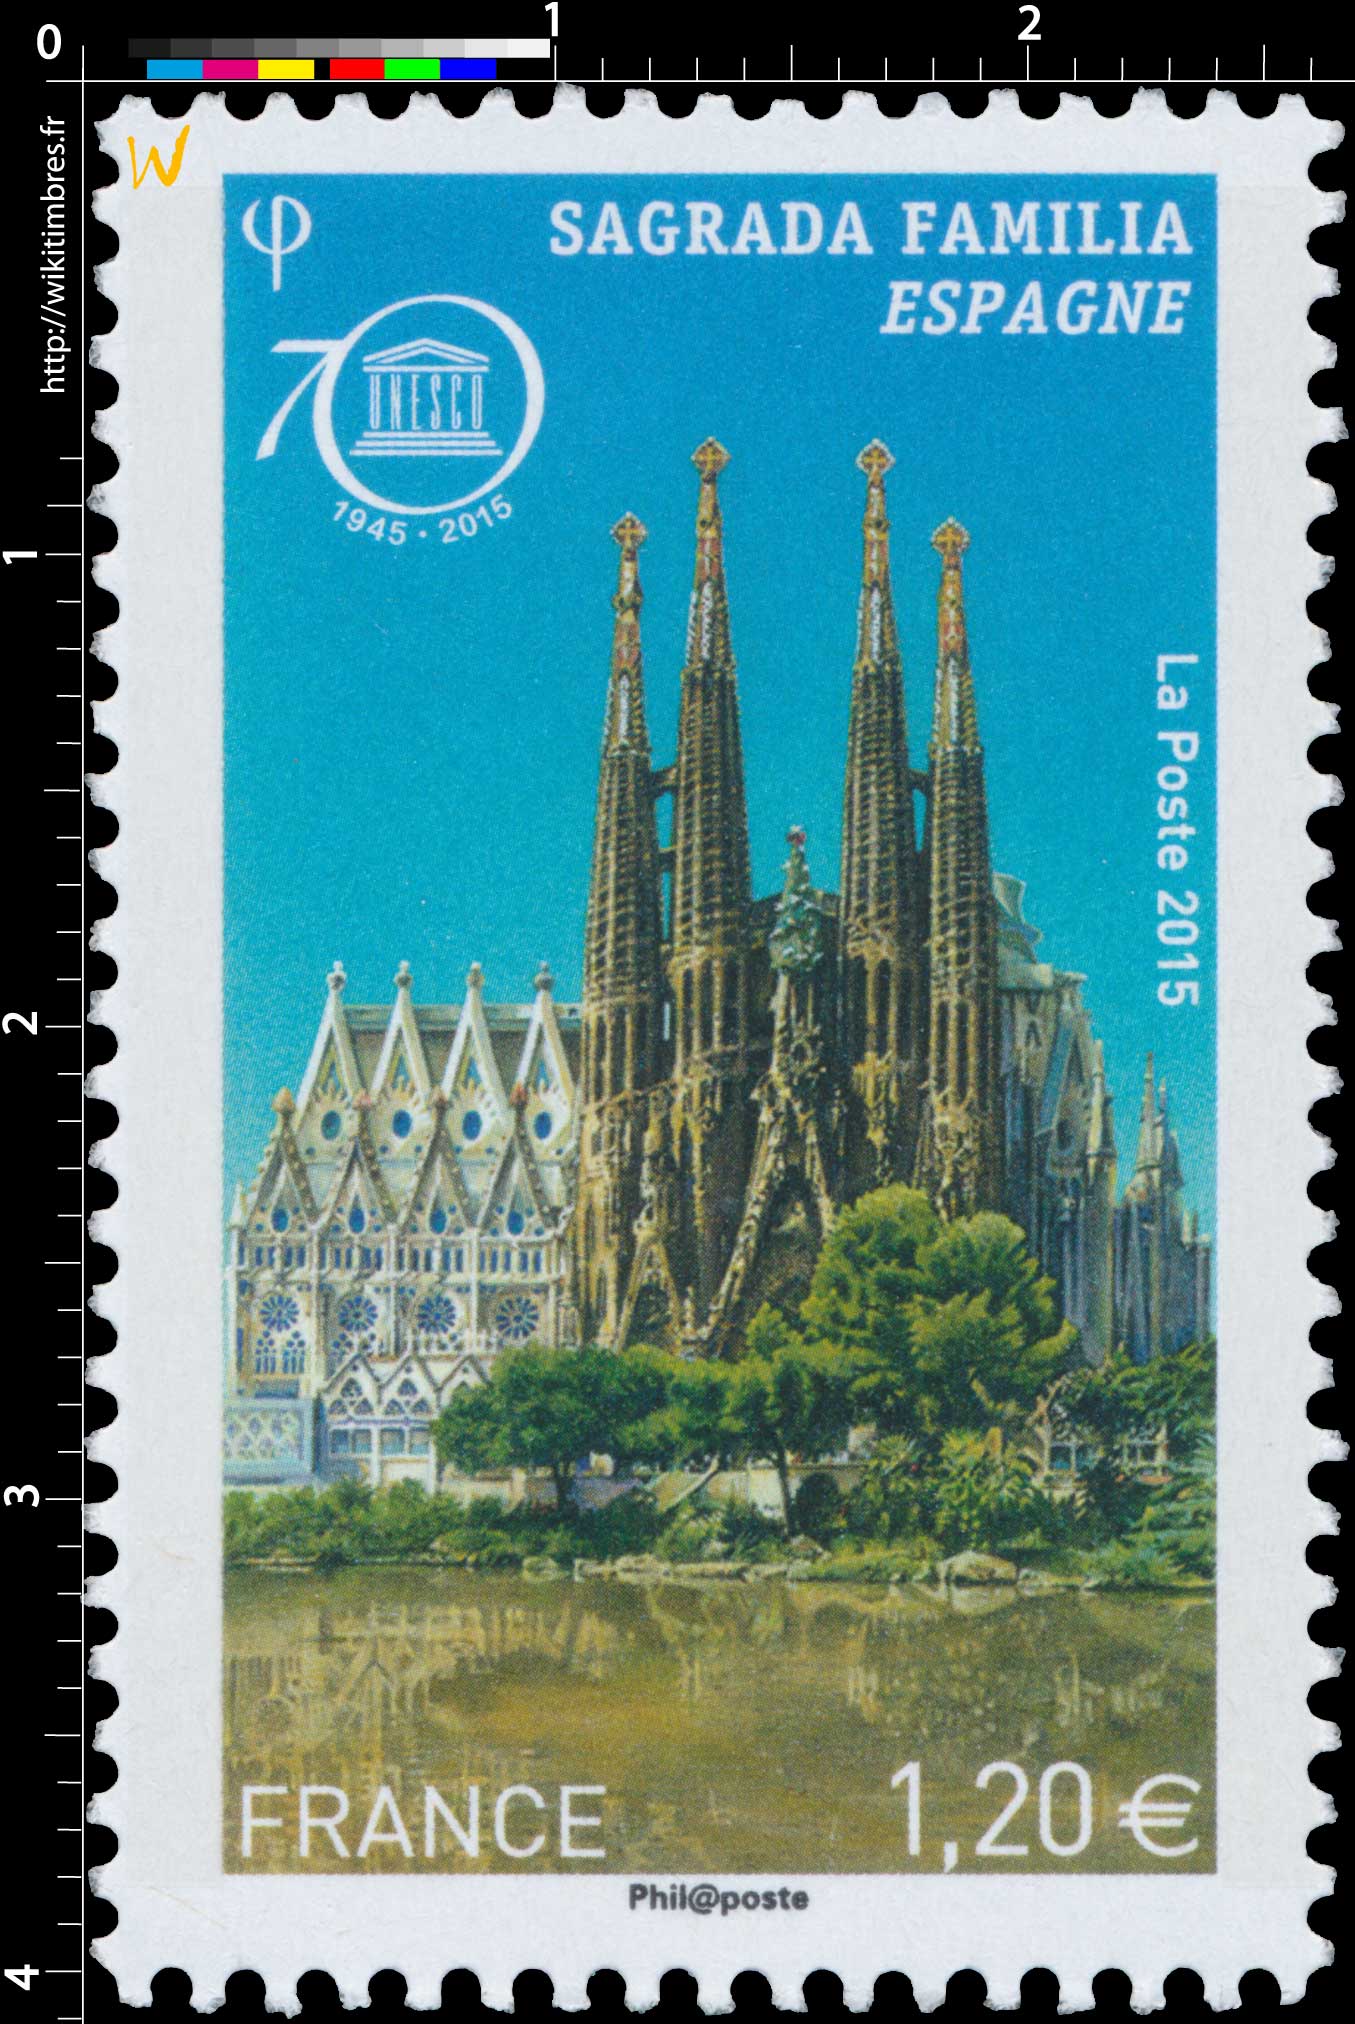 2015 UNESCO Sagrada Familia Espagne